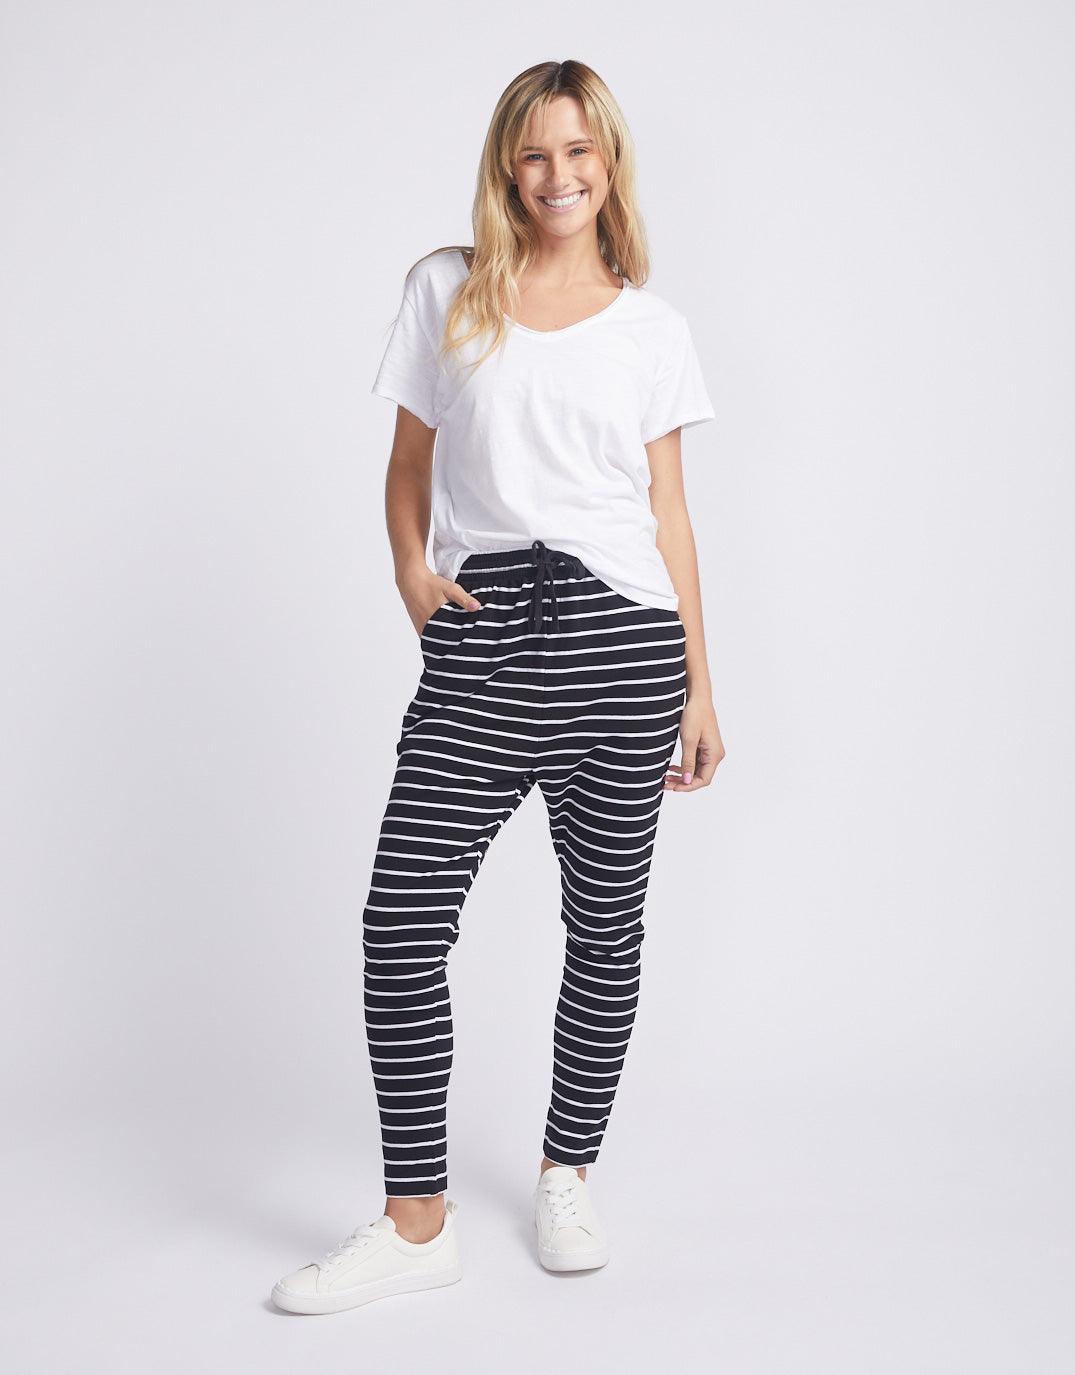 Betty Basics - Jade Lounge Pants - Black/White Stripe - White & Co Living Pants